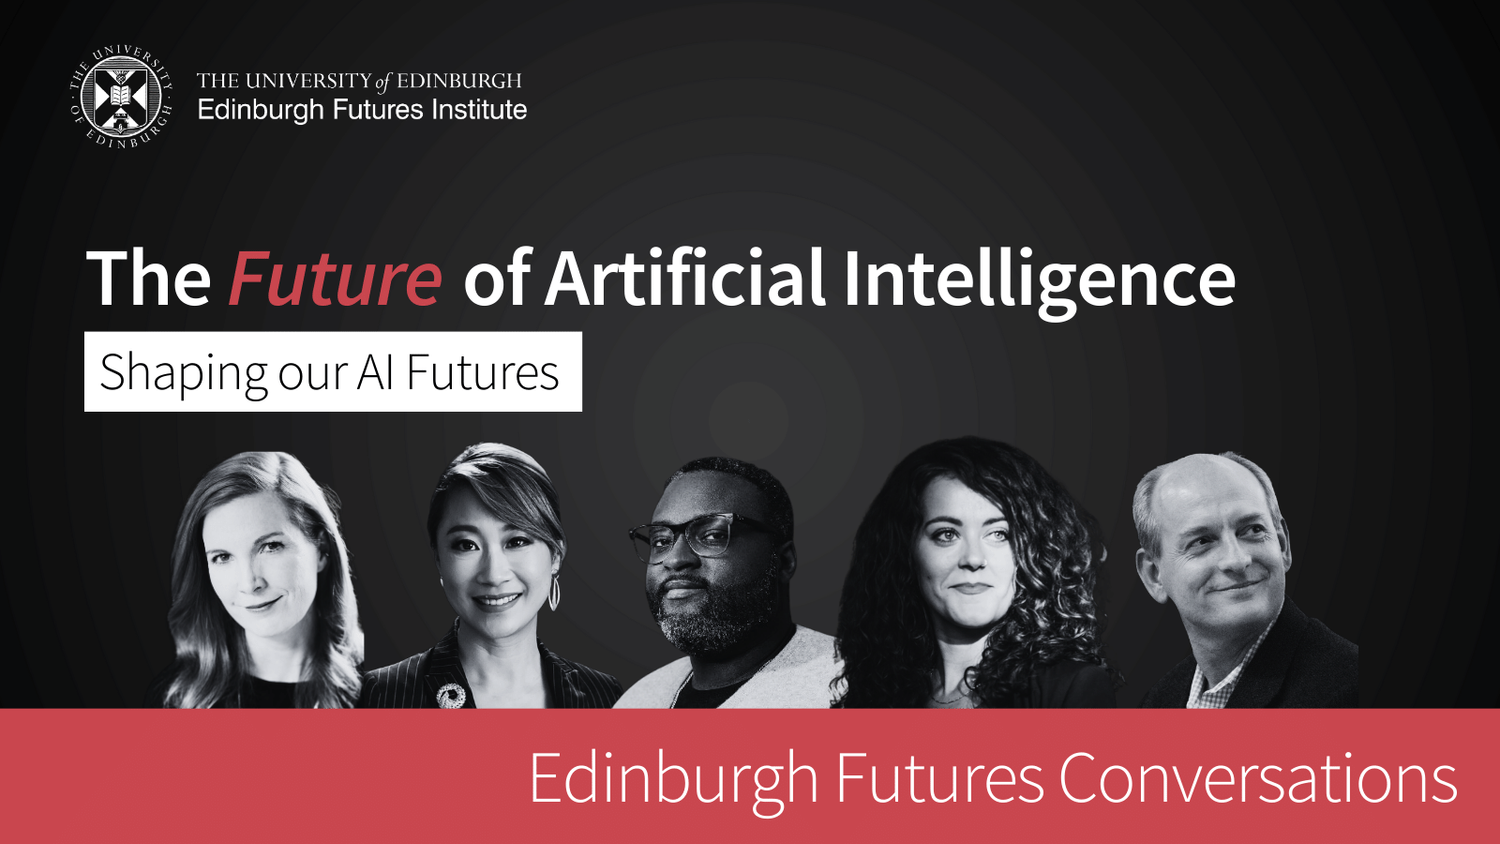 Edinburgh Futures Conversations: Shaping our AI Futures